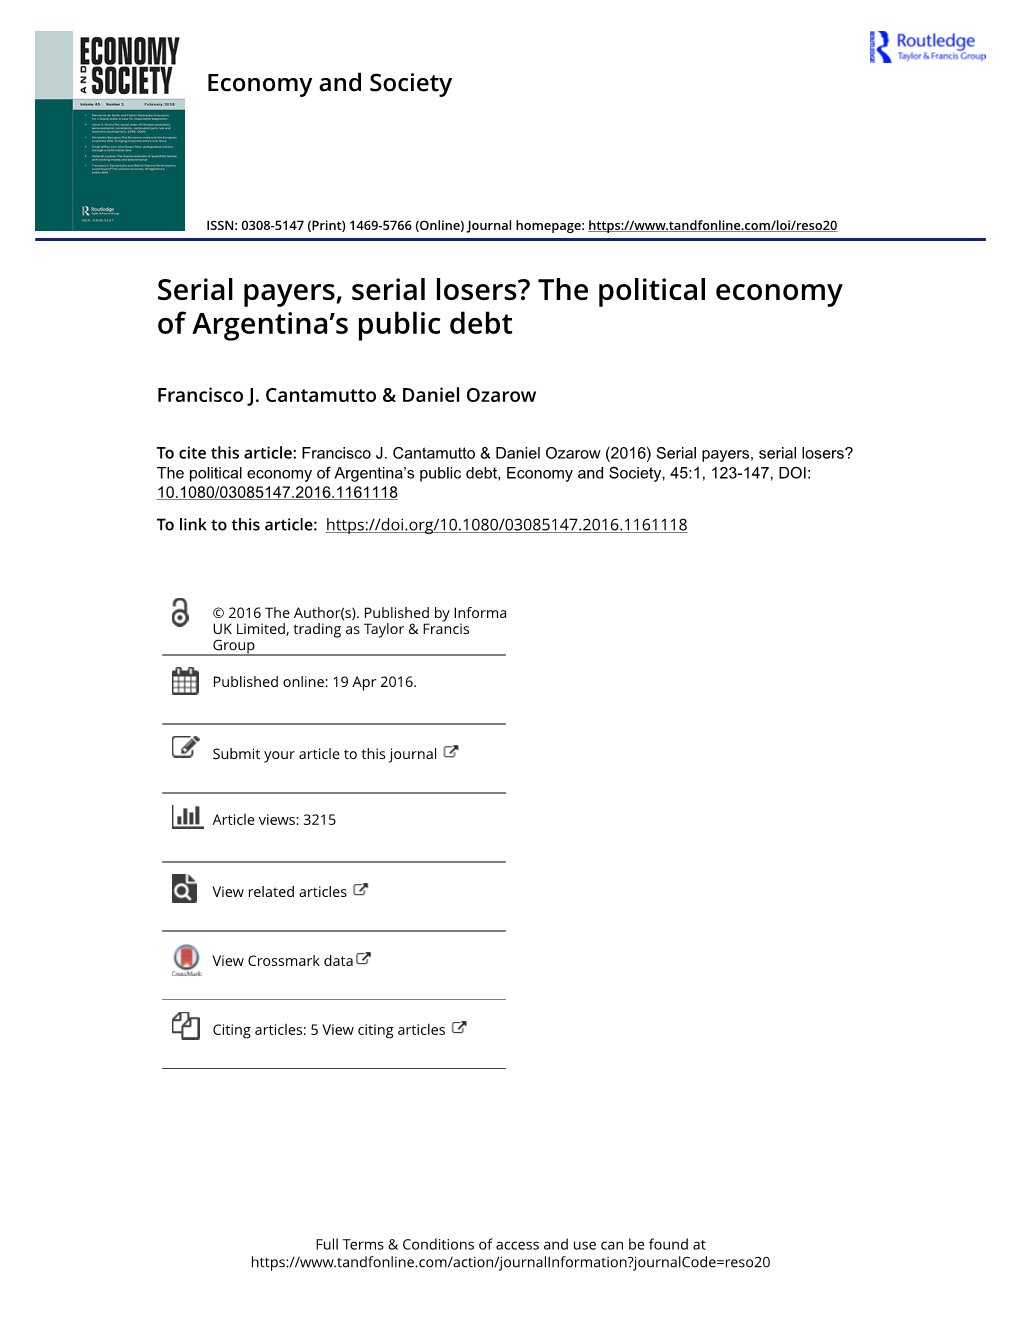 The Political Economy of Argentina's Public Debt